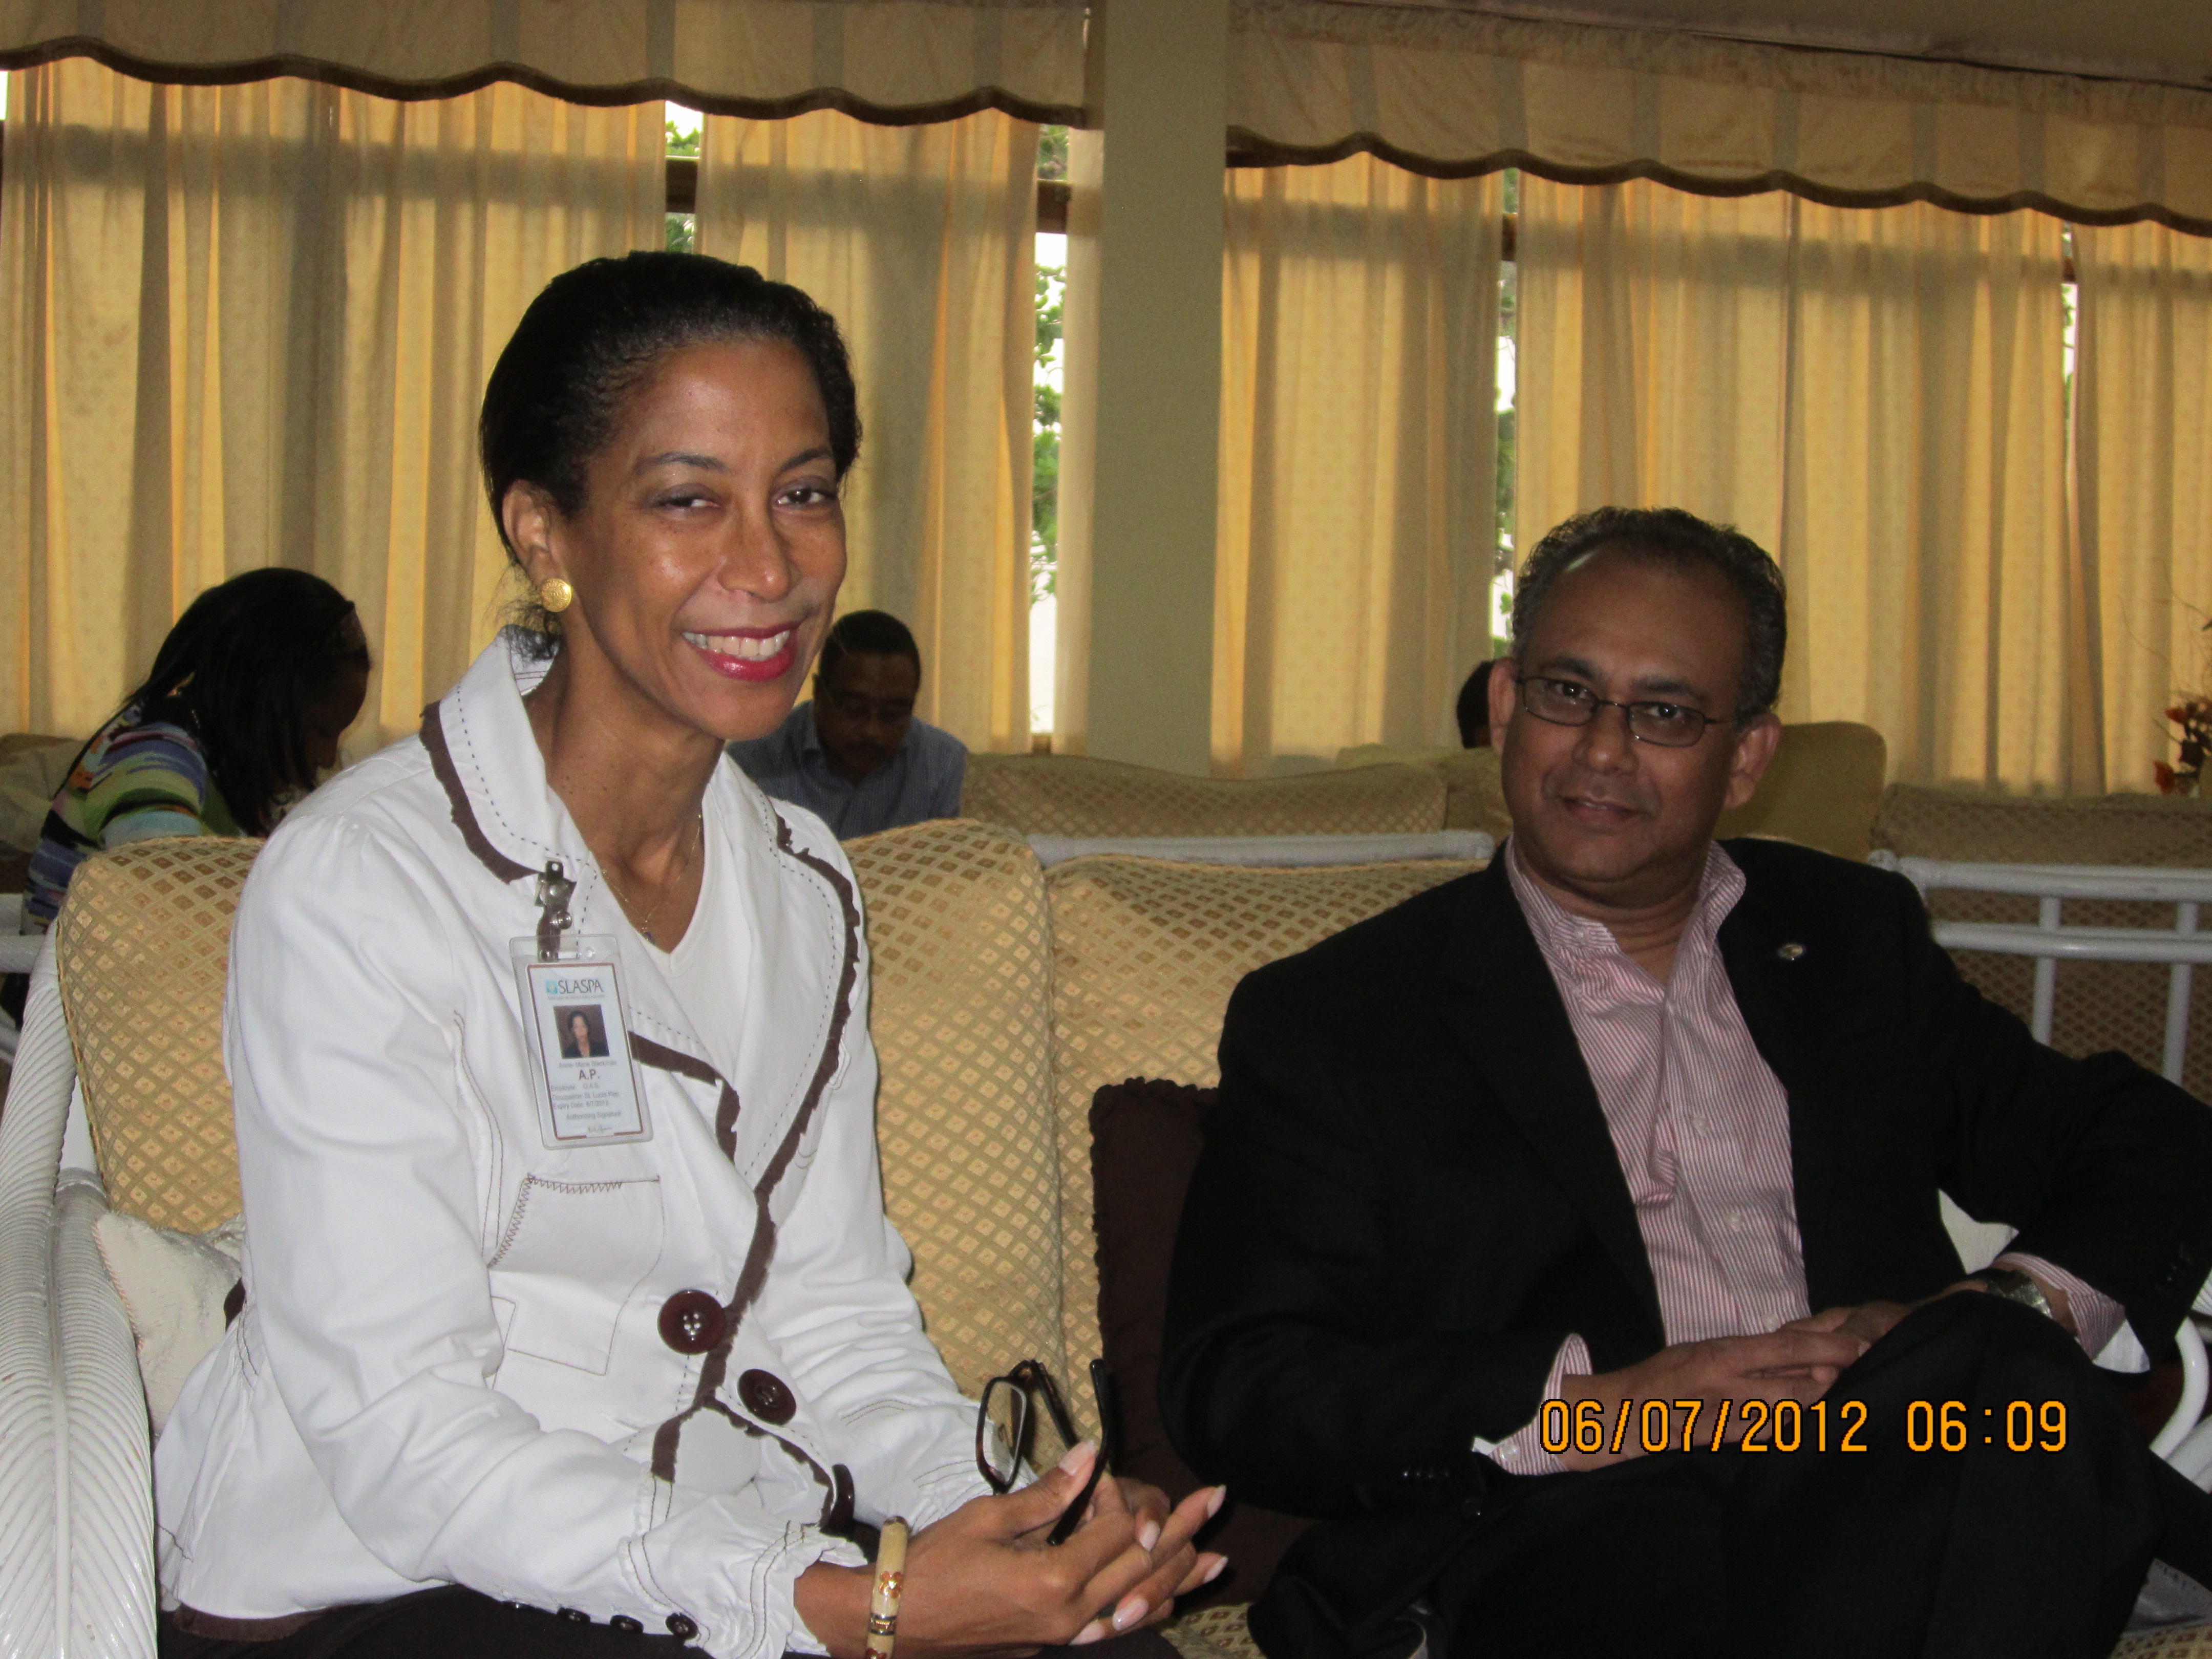 OAS Representative meets Assistant Secretary General, Ambassador Ramdin(July 6, 2012)